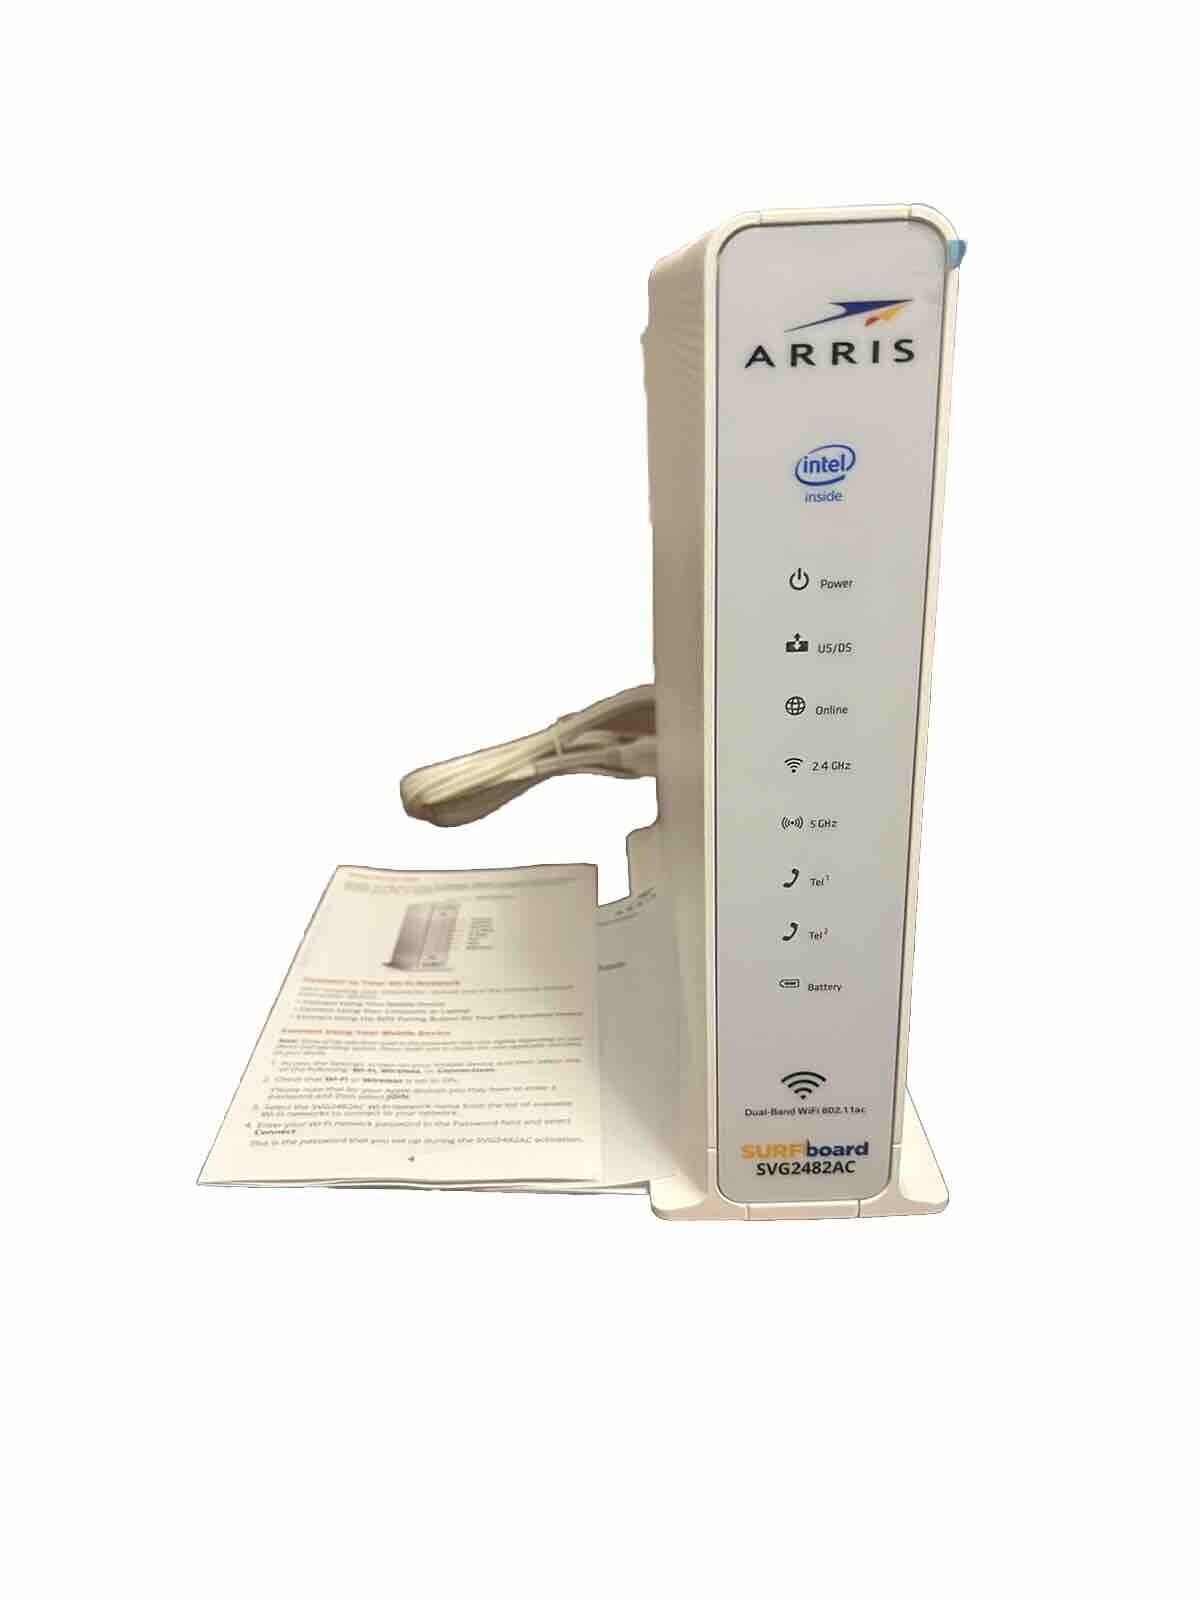 ARRIS SURFboard WiFi & Voice Router SVG2482AC 4 Prt Ethernet & Optional Battery